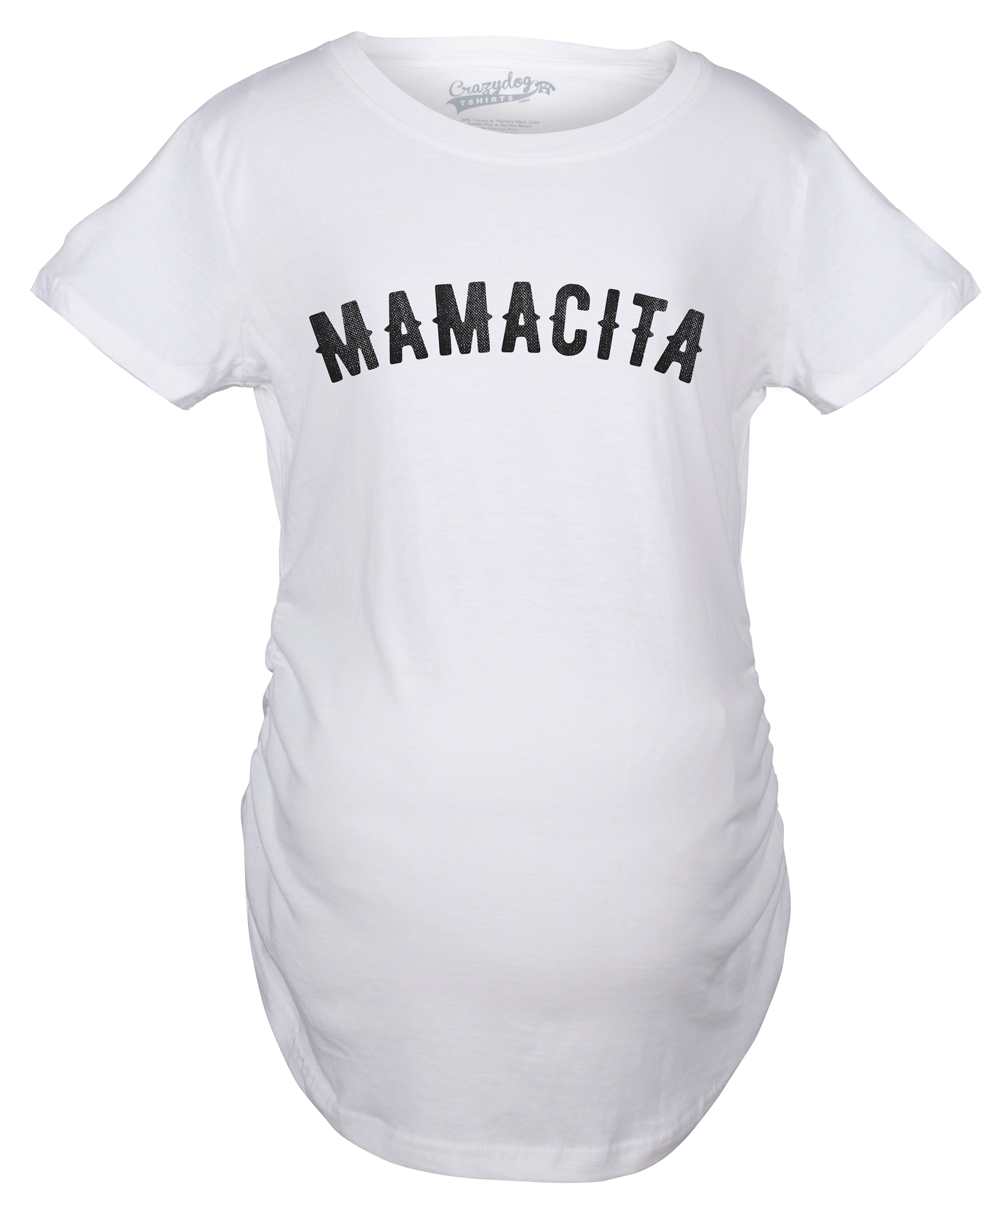 Funny White Mamacita Maternity T Shirt Nerdy Mother's Day Tee